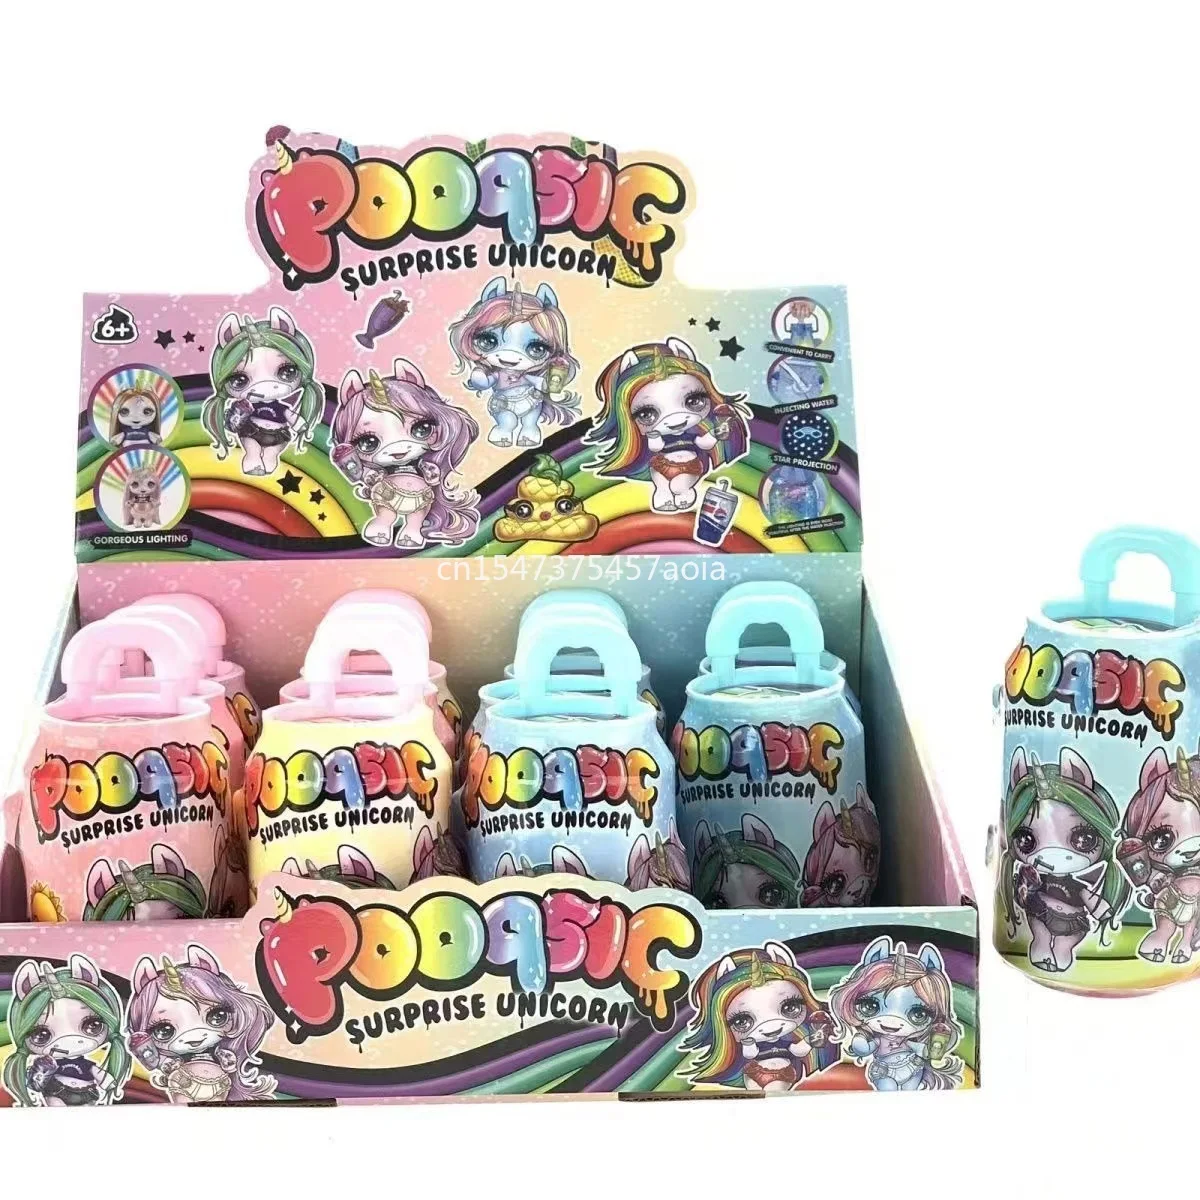 Poopsie-Conjunto de muñecas de lujo para niñas, juguetes originales de Slime,  unicornio, arcoíris, purpurina, unicornio, caca, mecedora, Slime,  Starlight, regalo de cumpleaños - AliExpress